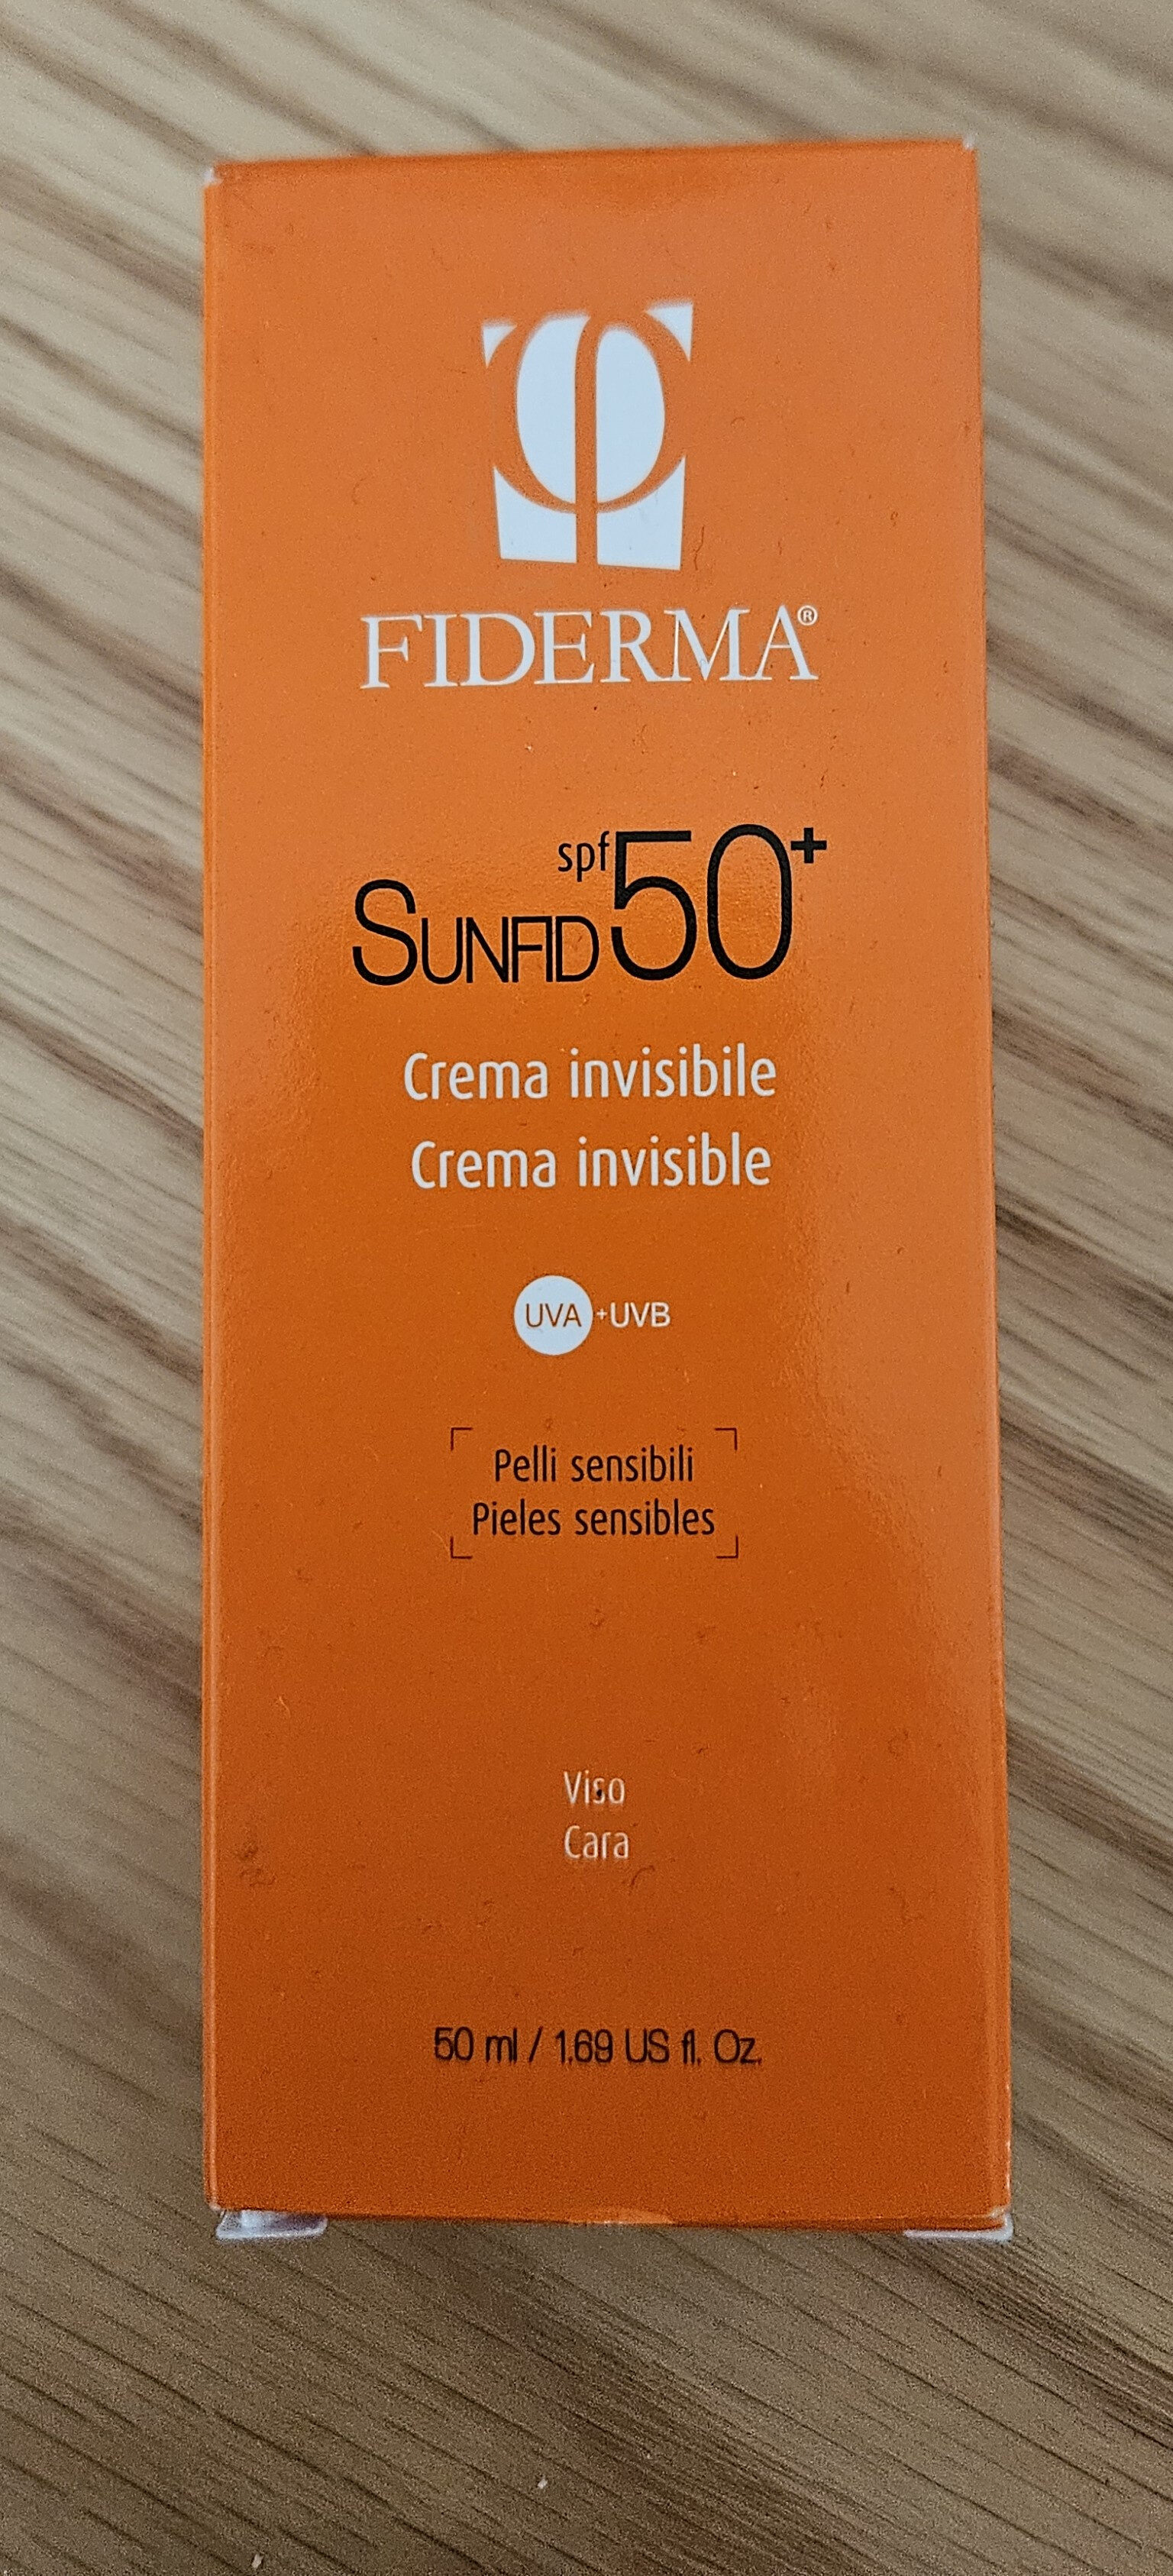 Sunfid spf50+ - Tuote - en